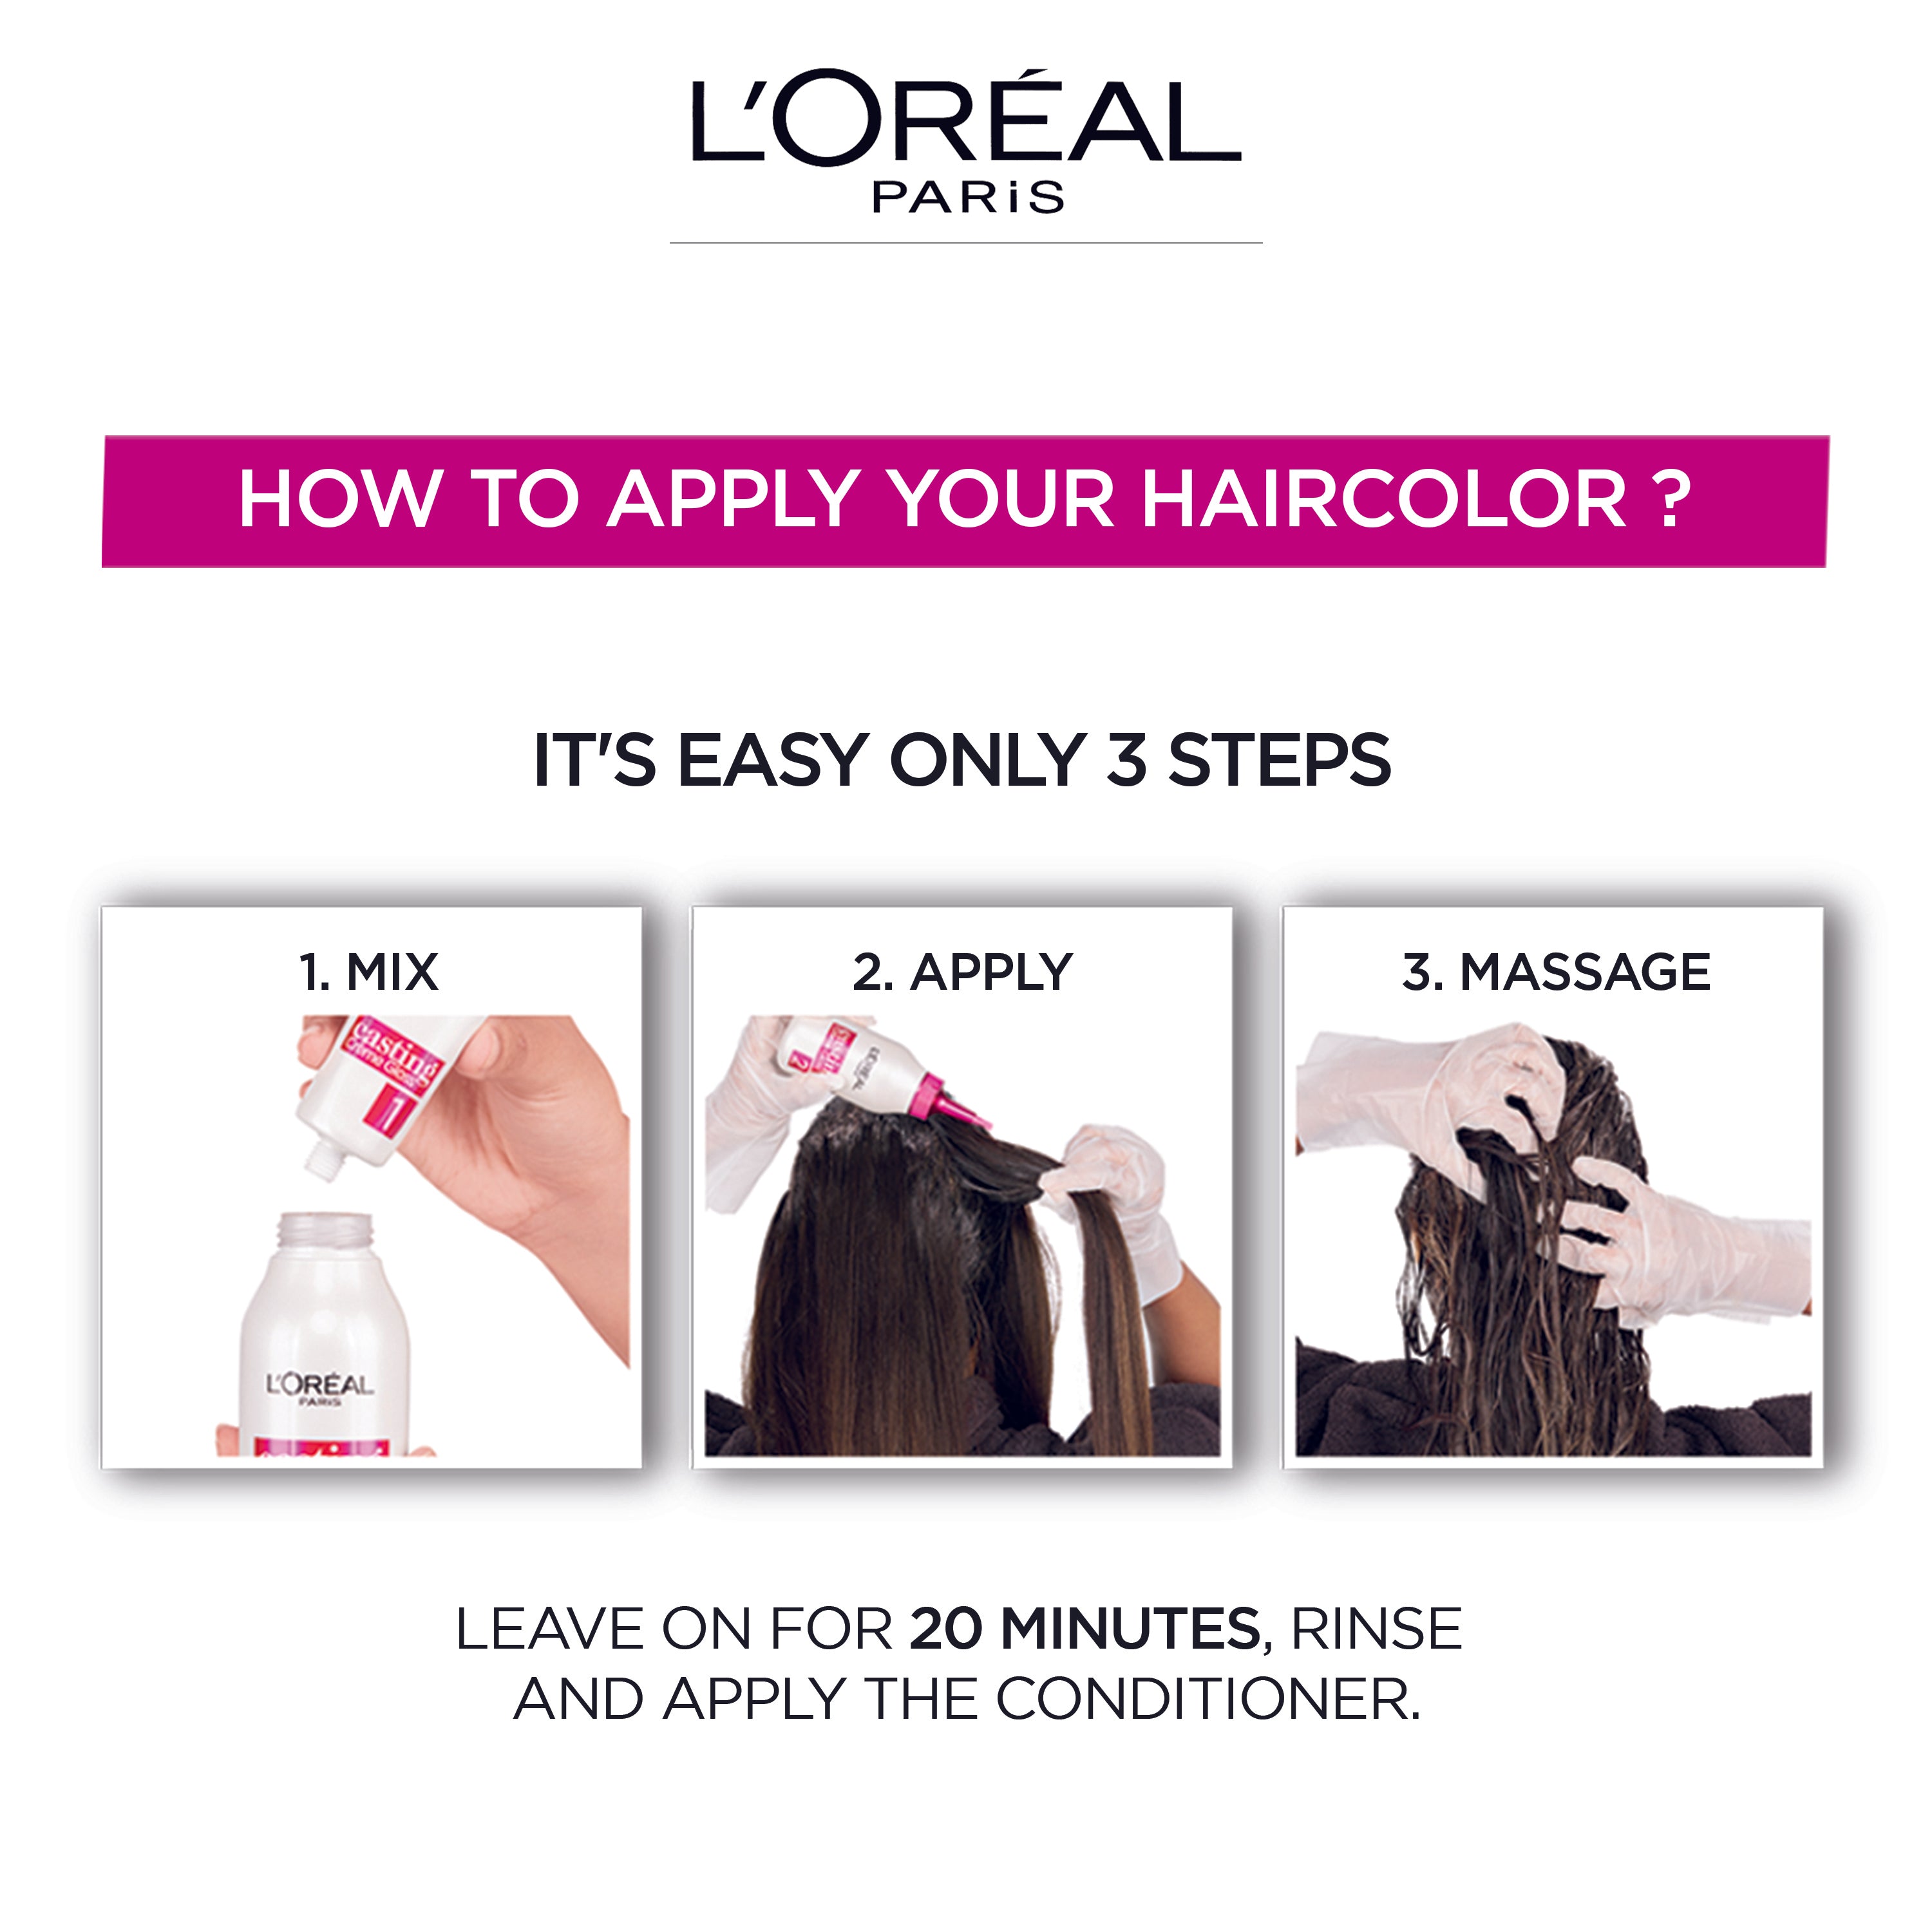 LOreal Paris Casting Creme Gloss - 323 Darkest Warm Brown Hair Color